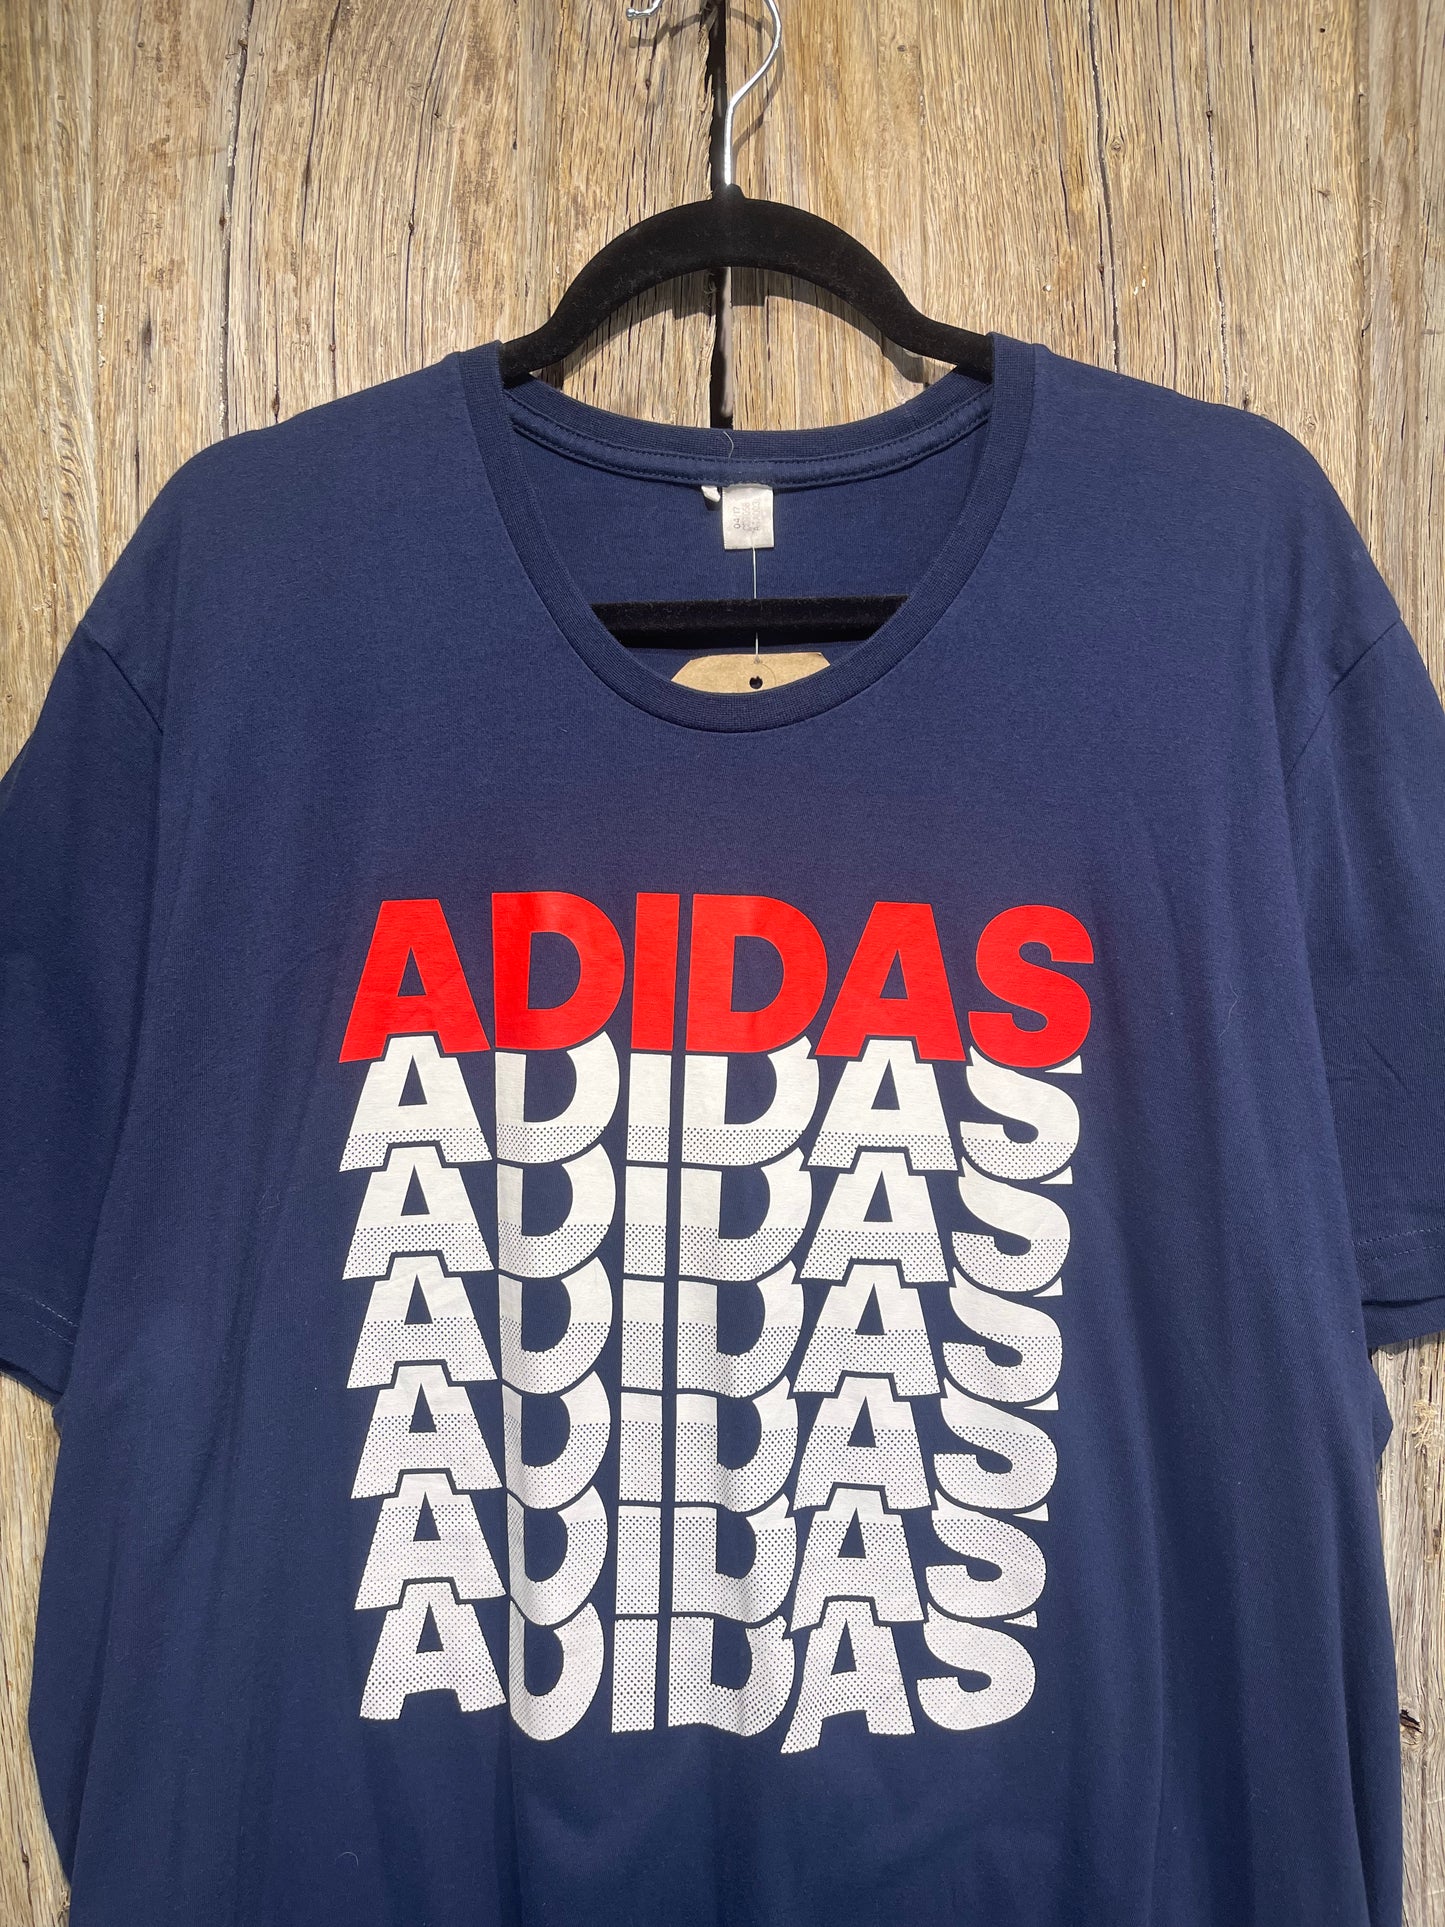 Adidas Repeat Logo Graphic Tee